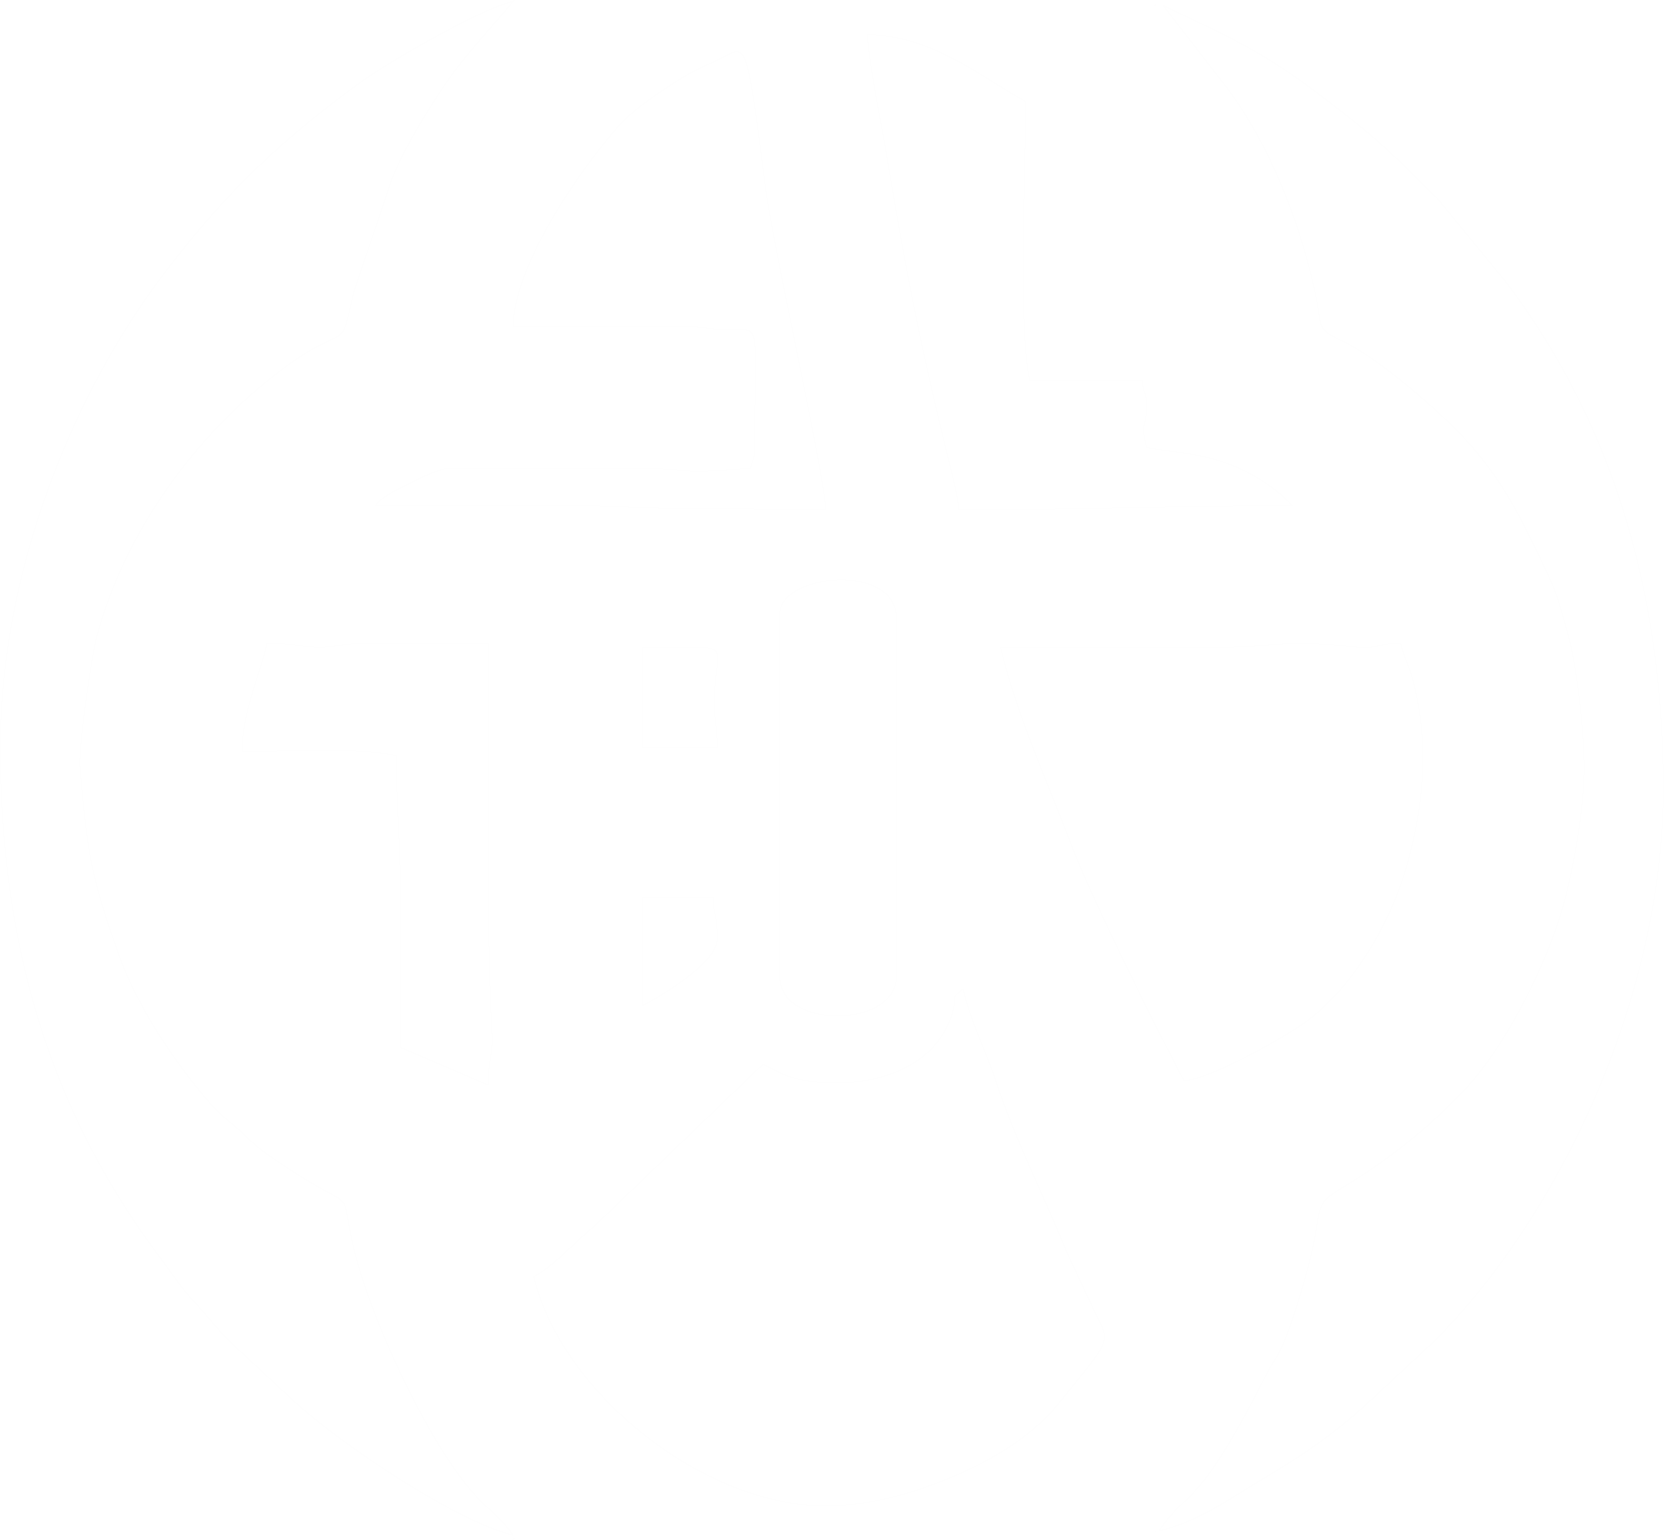 Obata Toshishiro